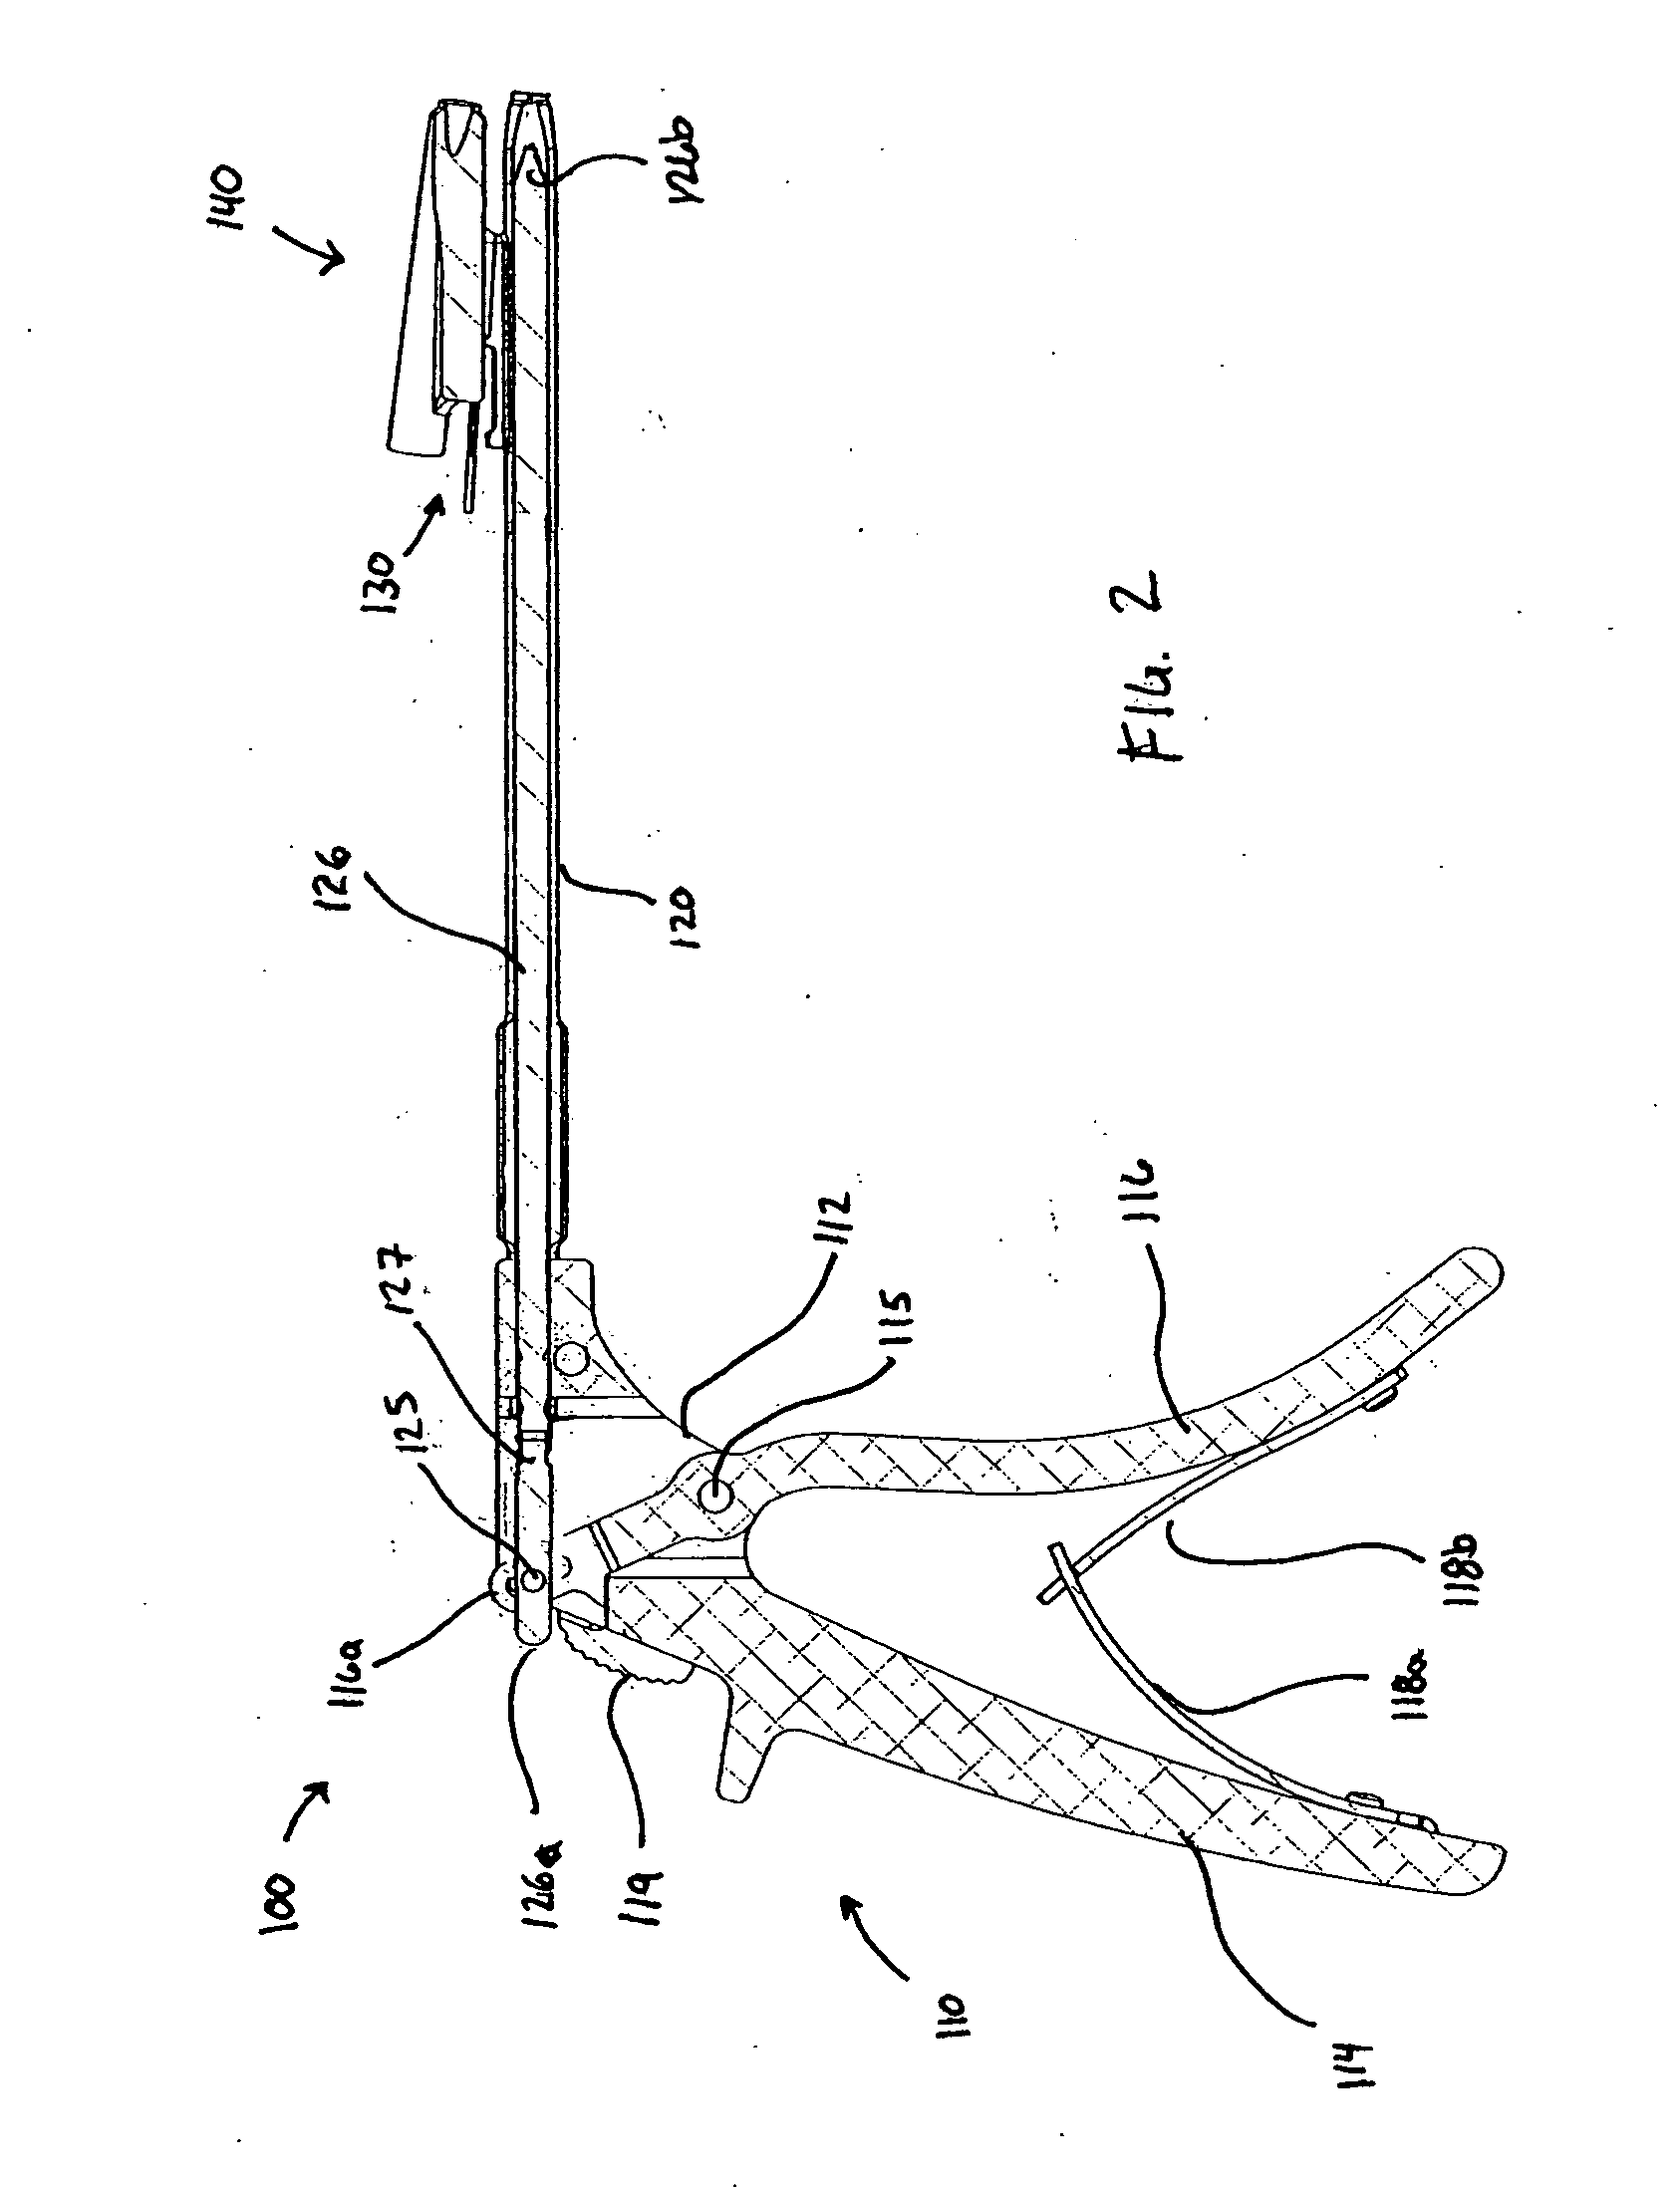 Cervical drill guide apparatus